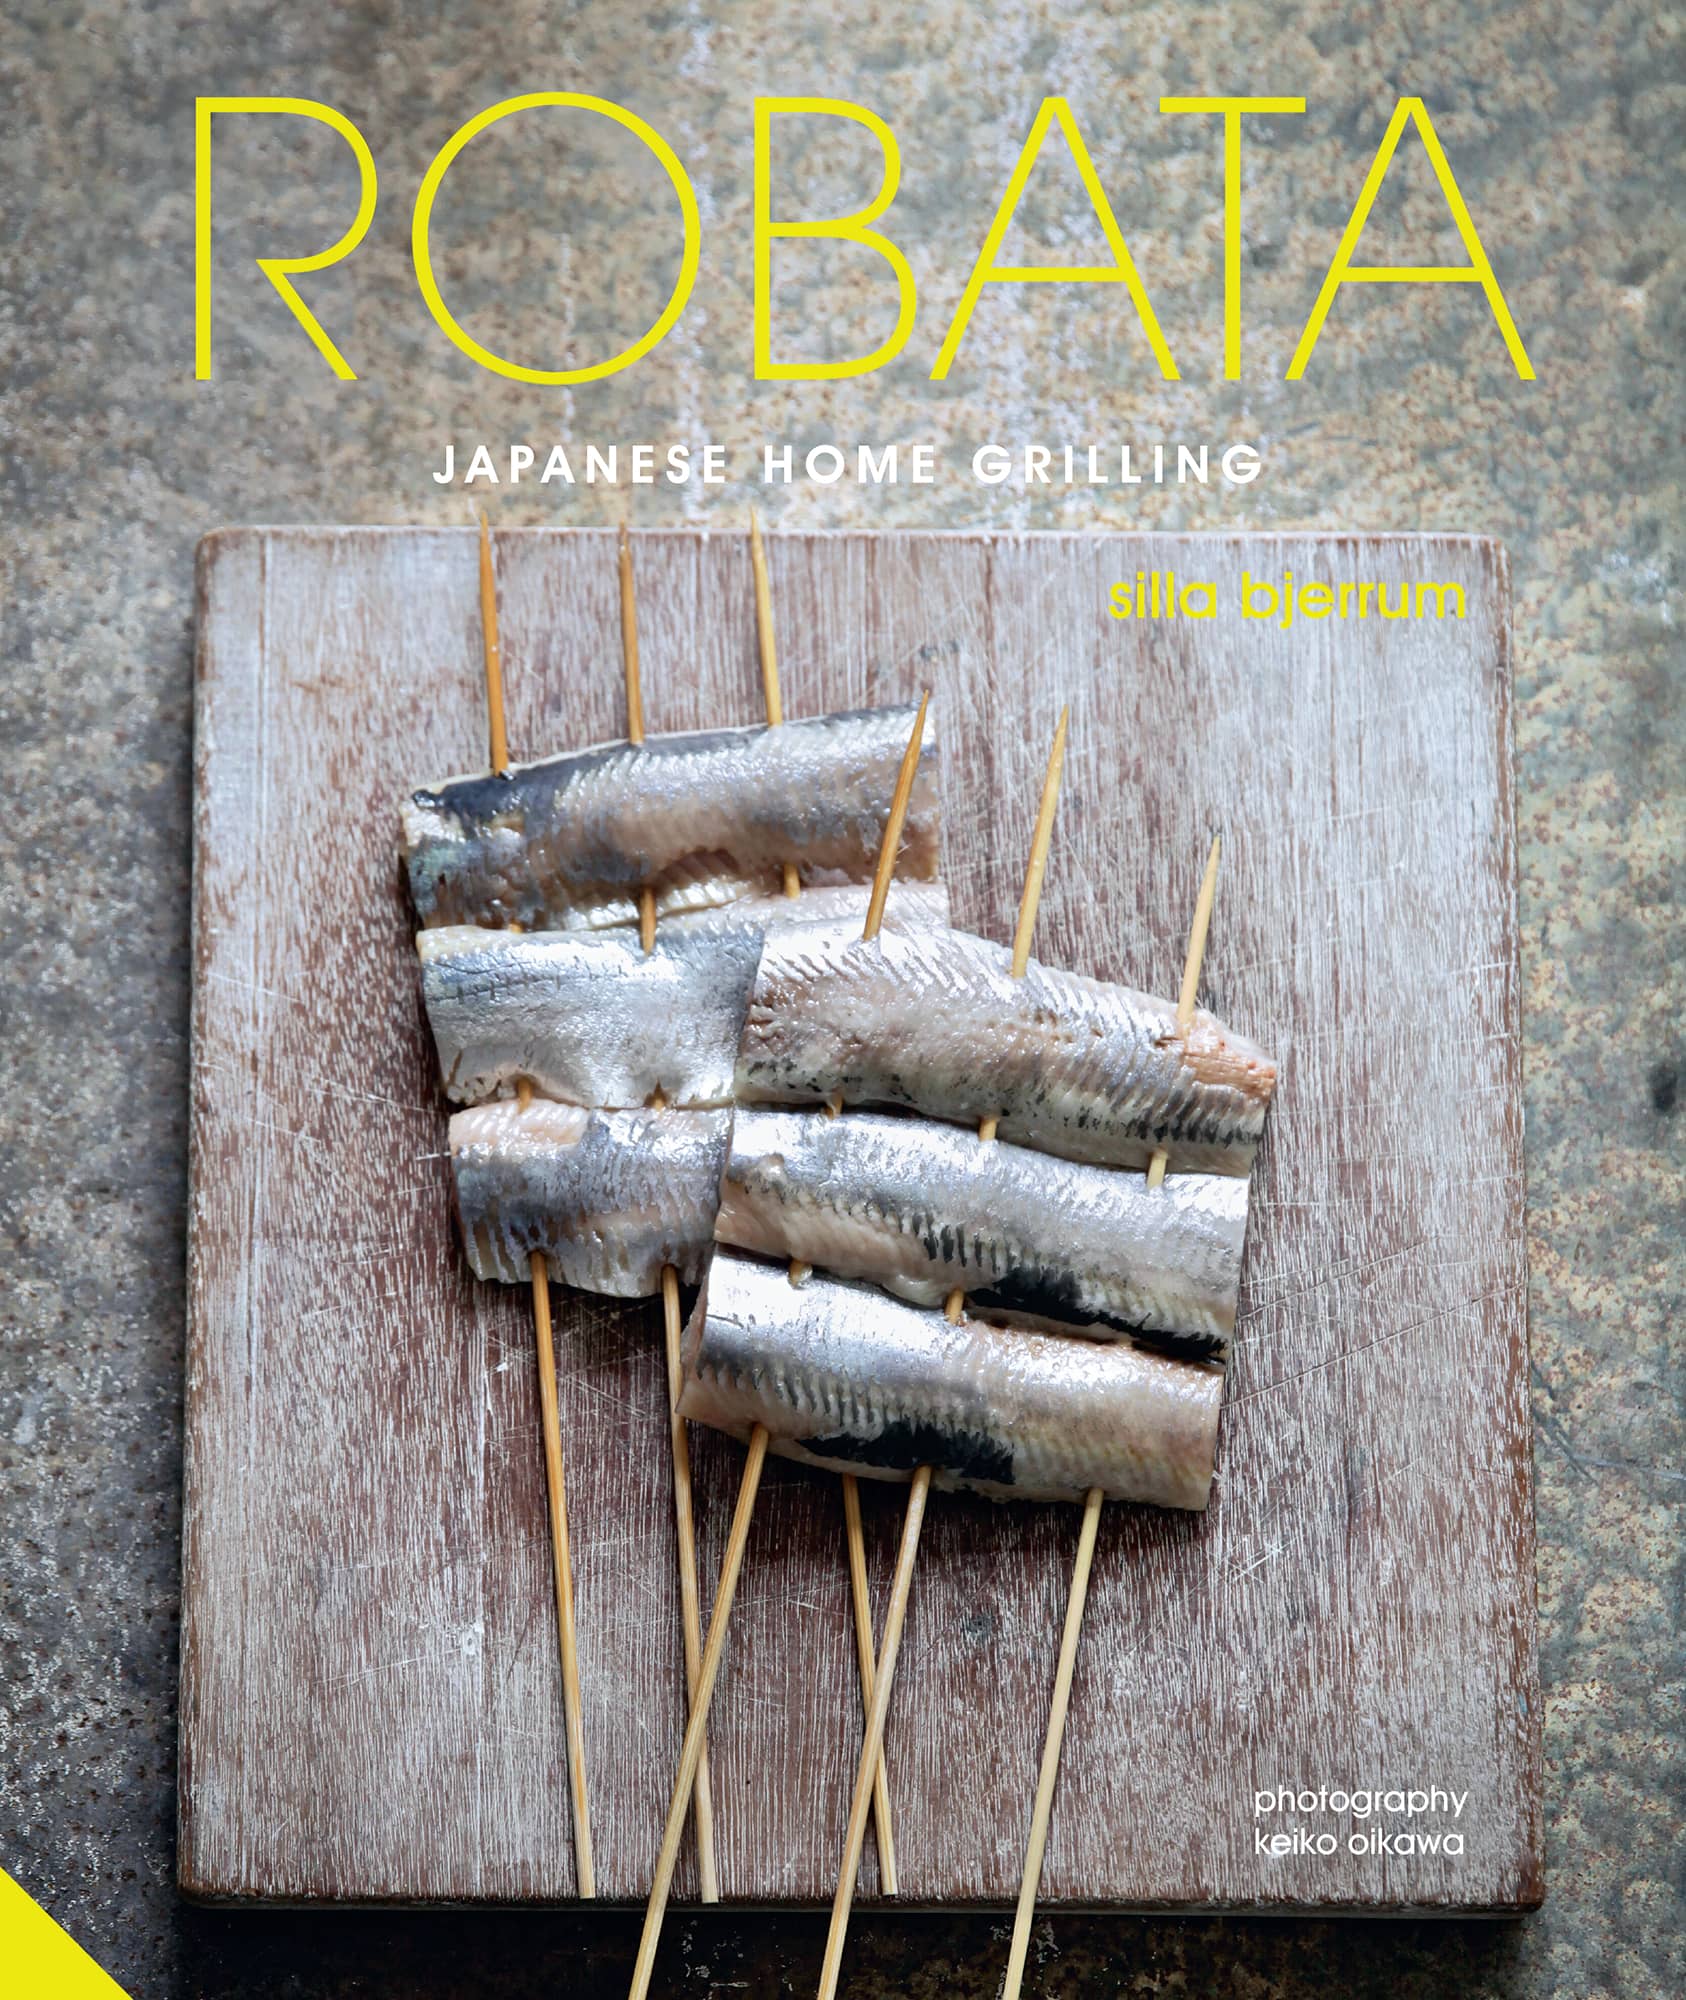 ROBATA JAPANESE HOME GRILLING Silla Bjerrum Photography Keiko Oikawa - photo 1